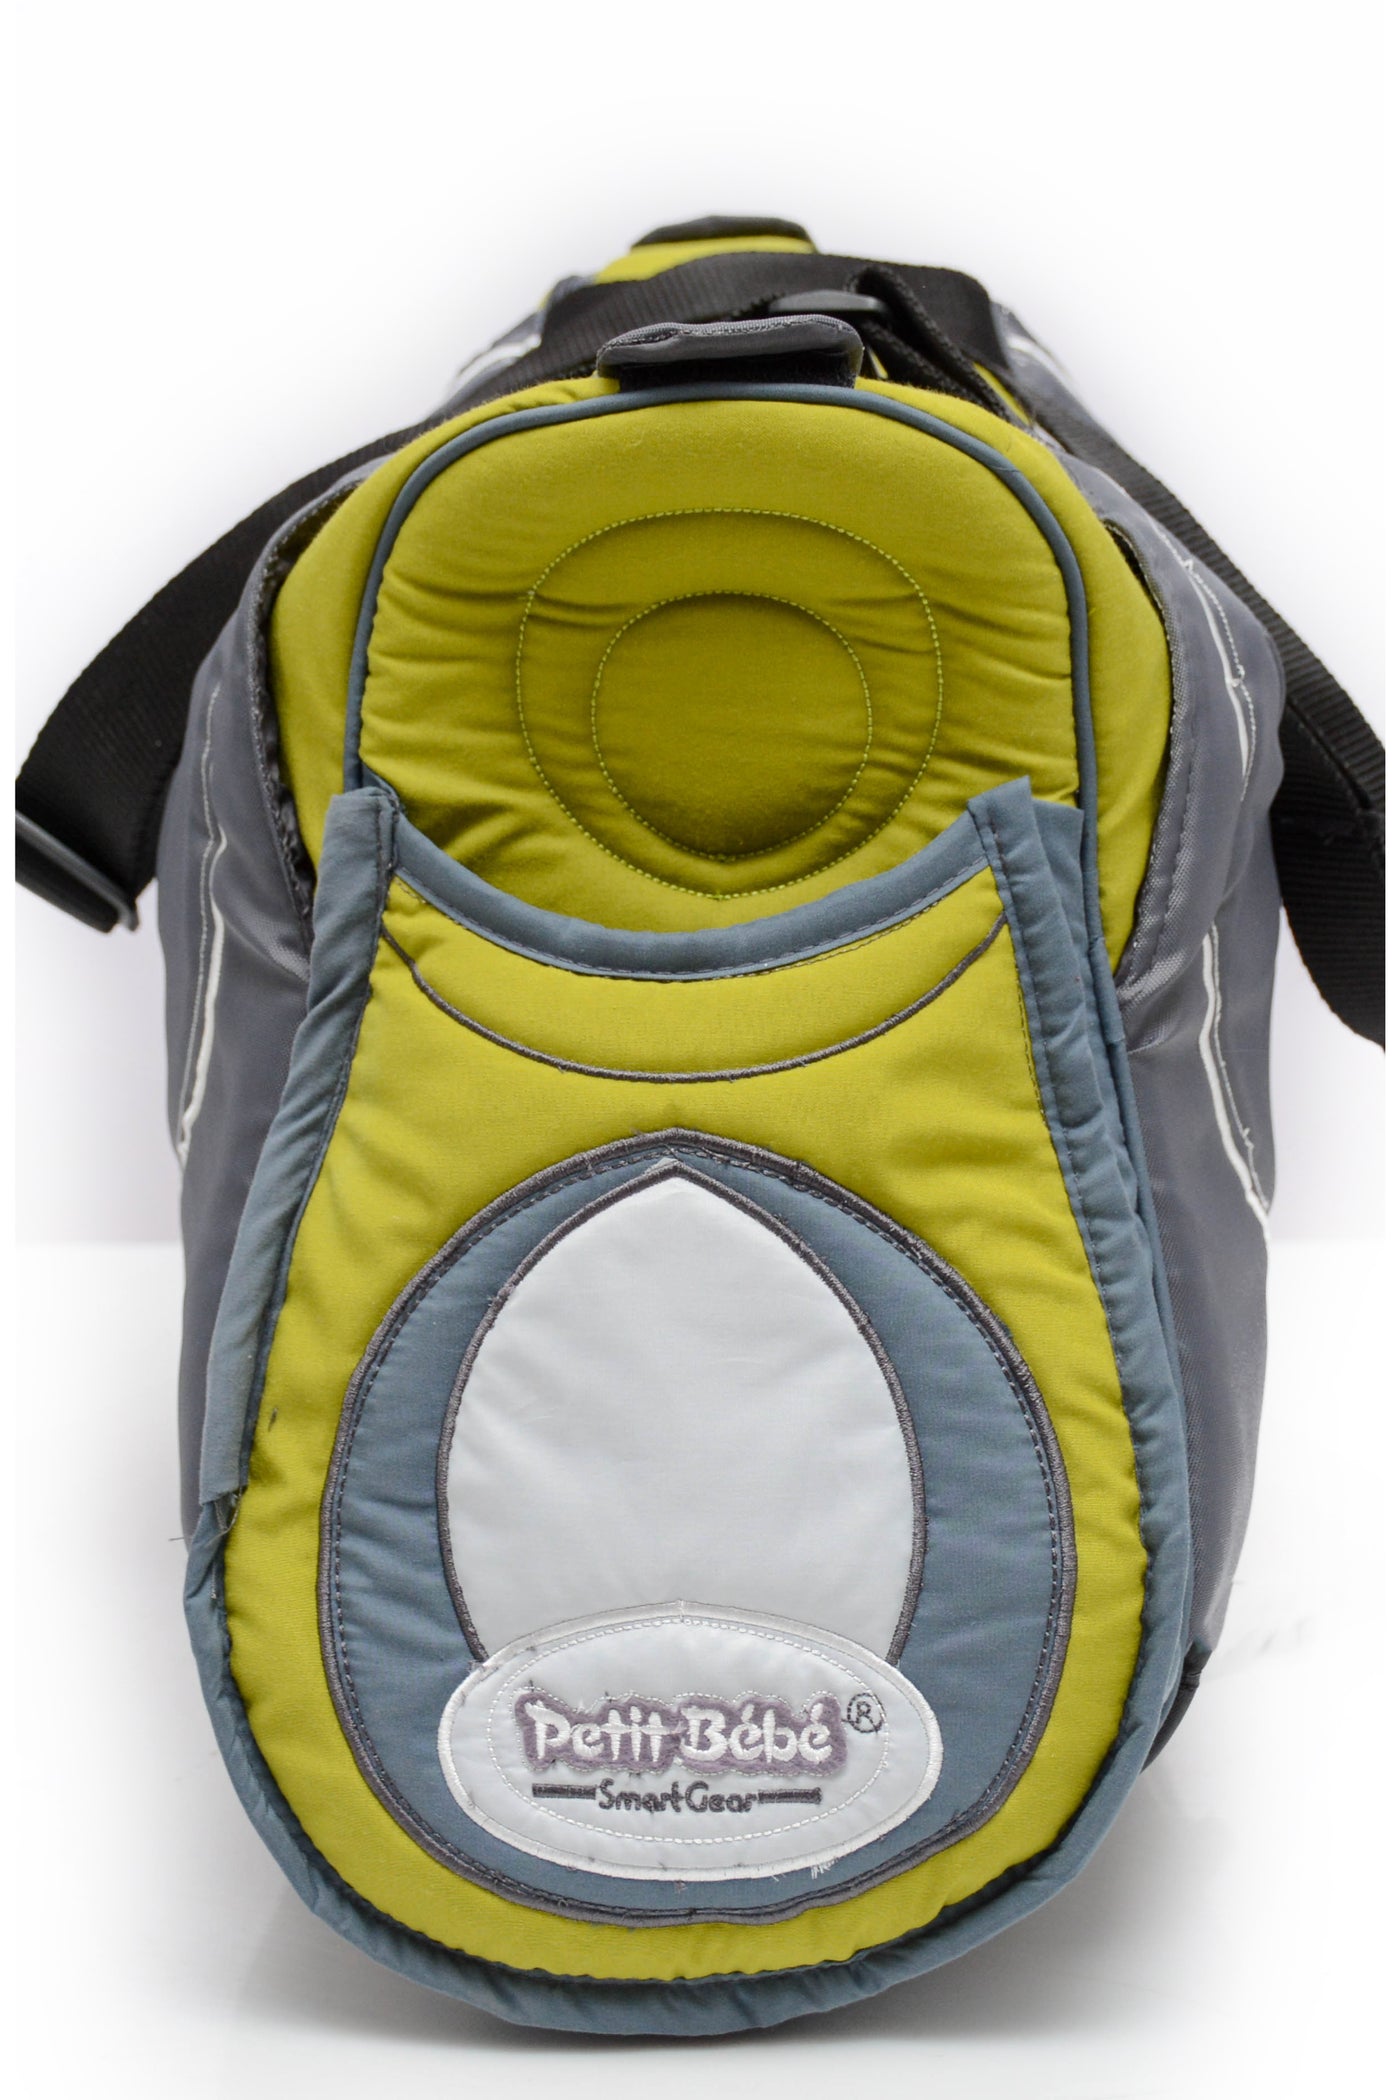 Diaper bag smart oval